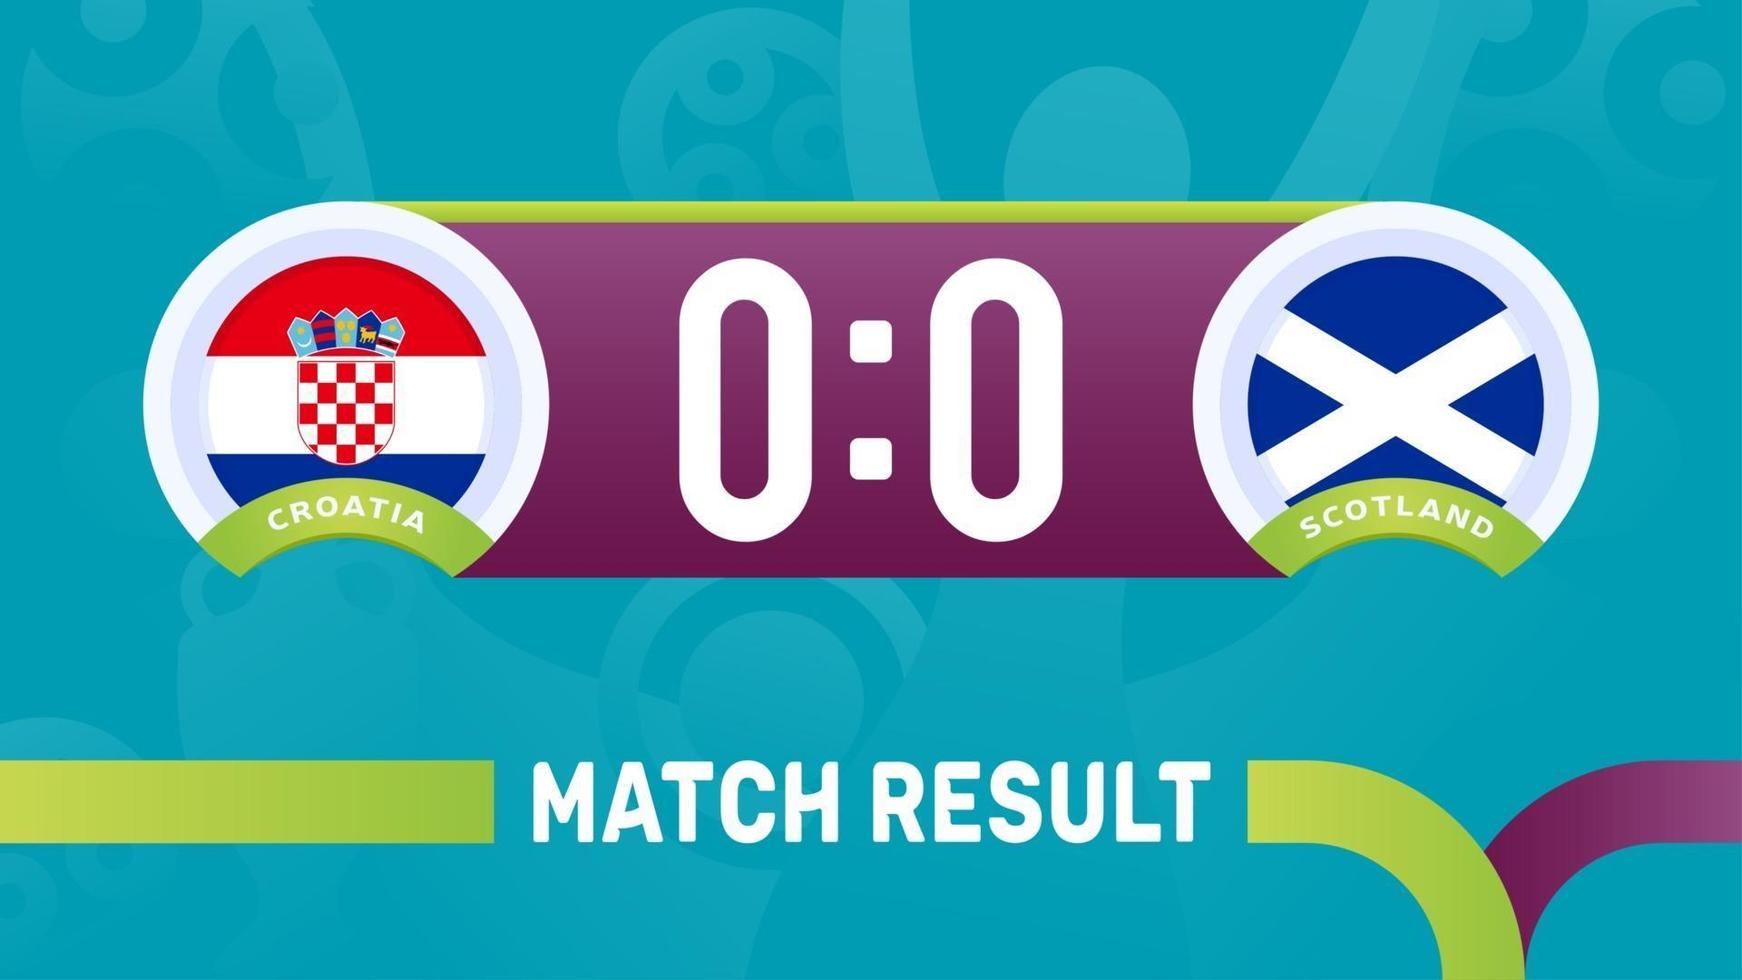 croatia scotland match result, European Football Championship 2020 vector illustration. Football 2020 championship match versus teams intro sport background